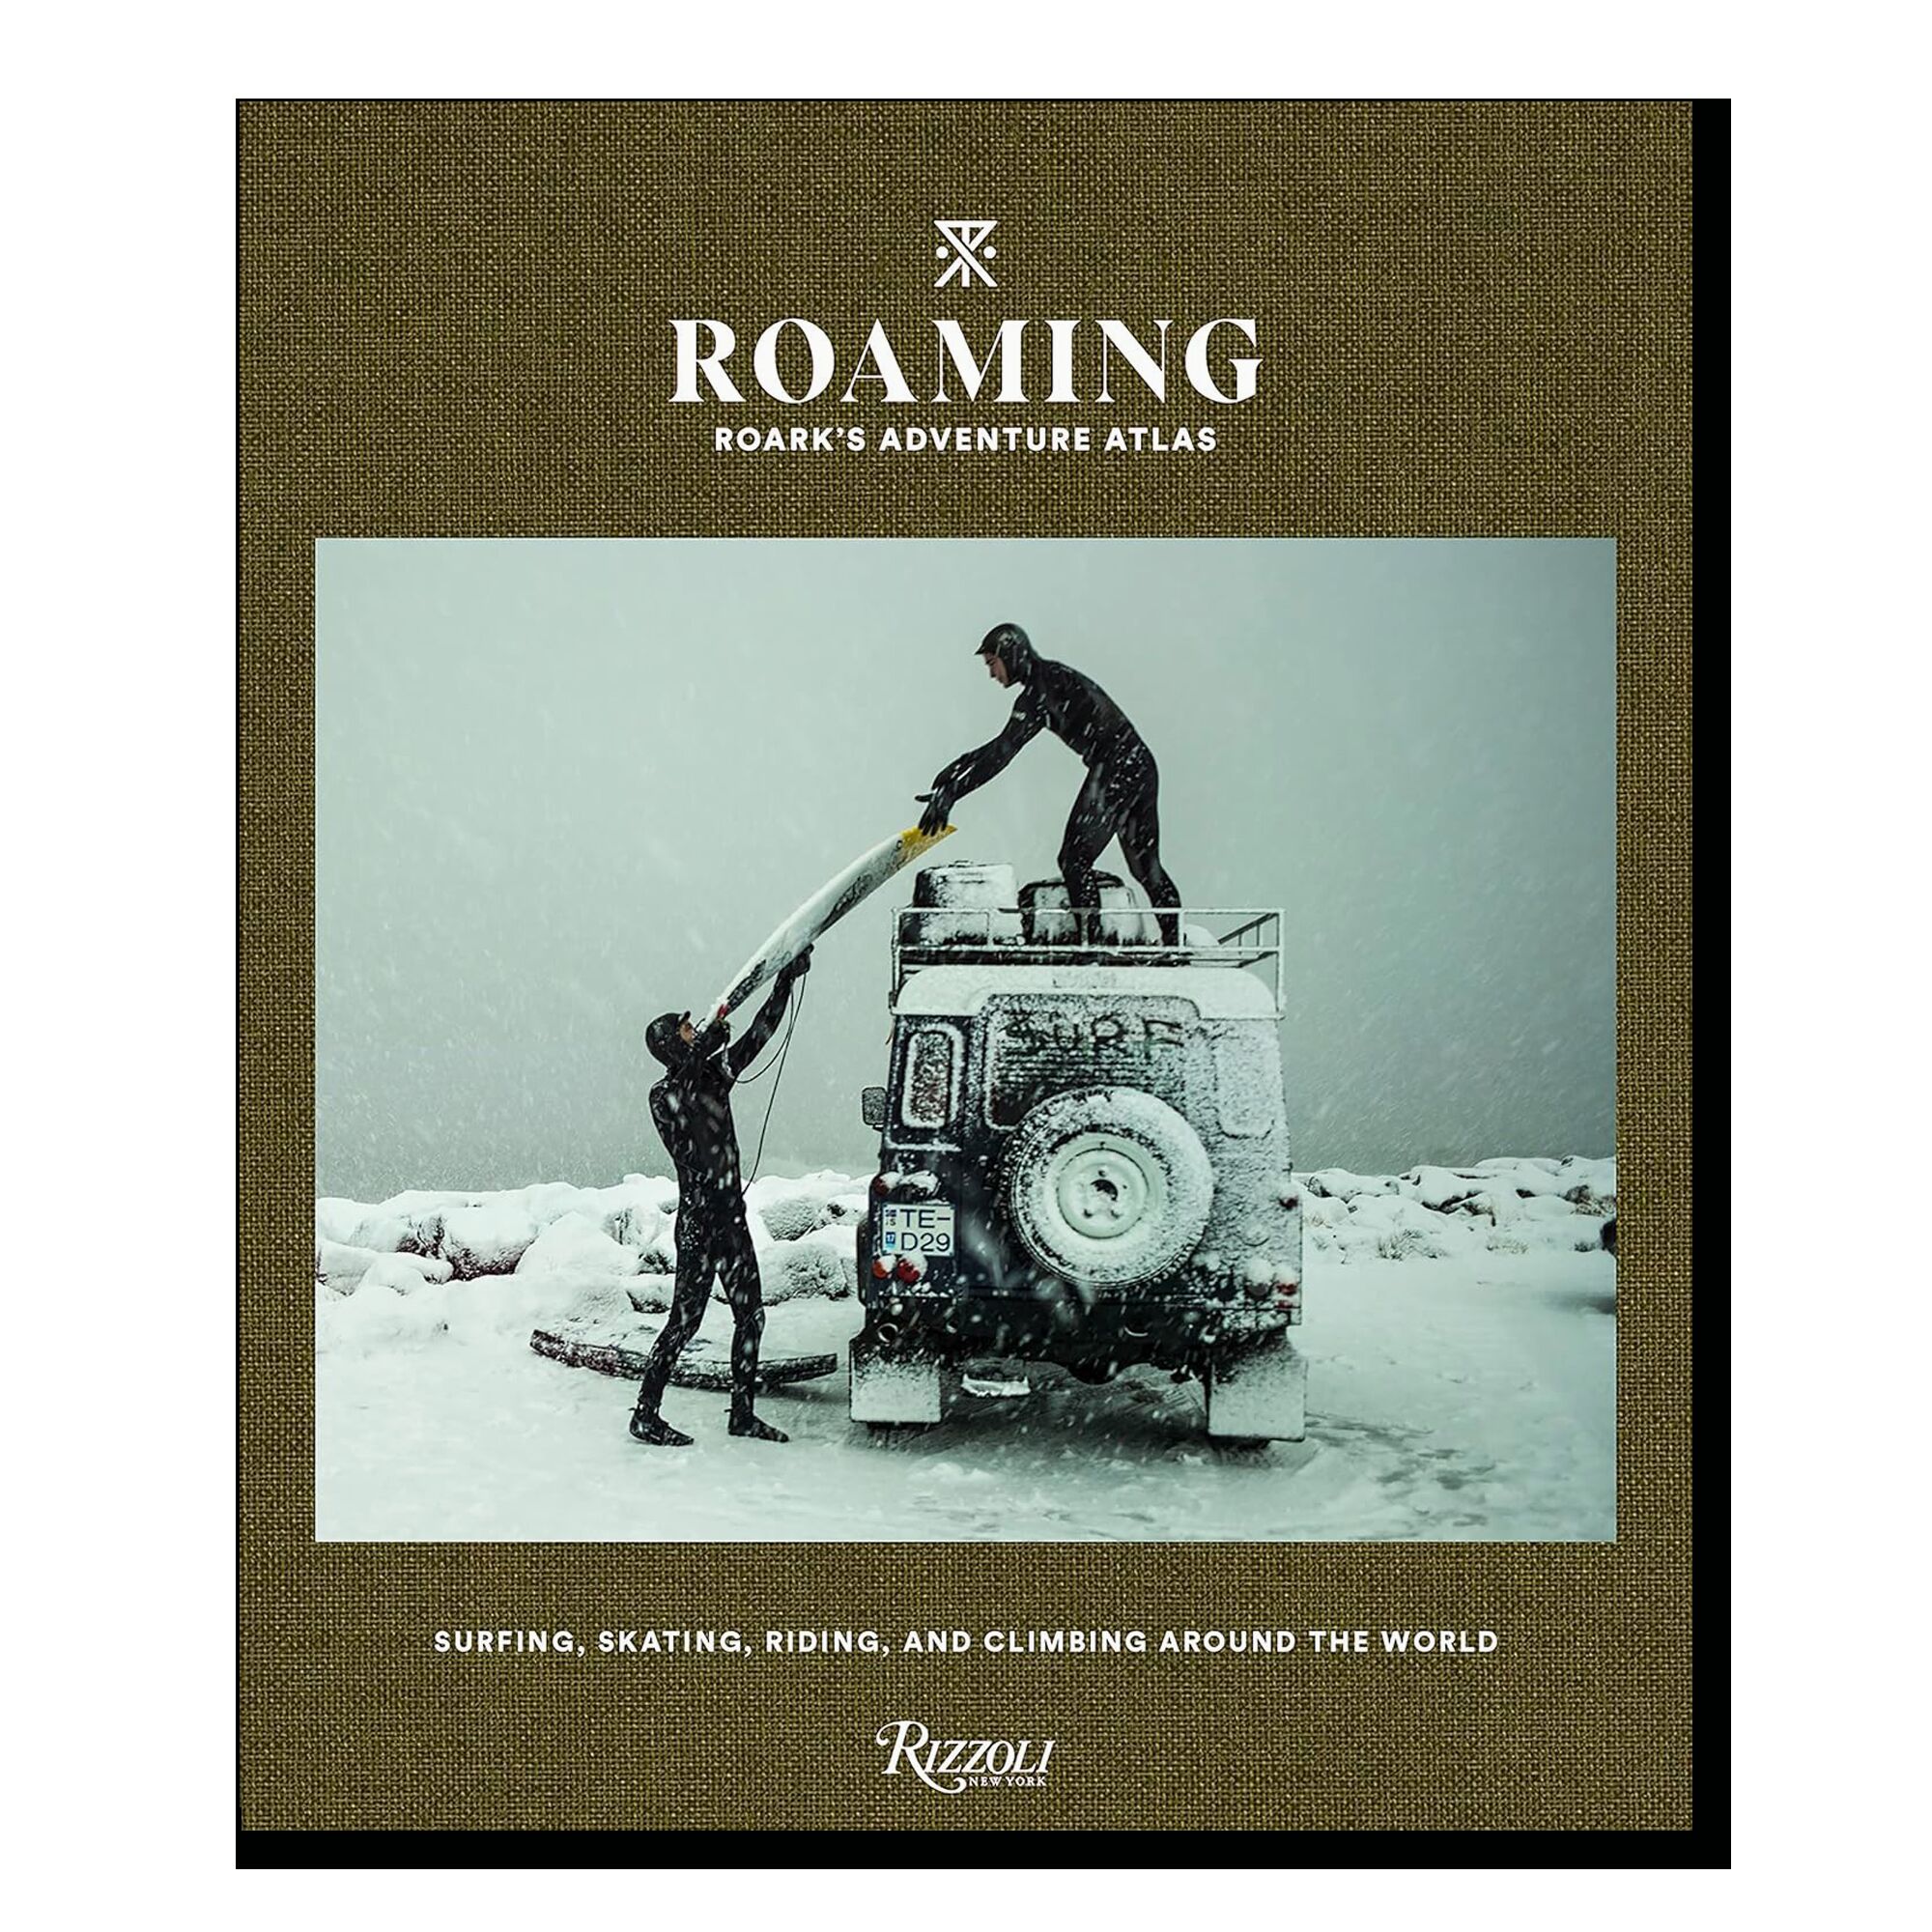 Roaming: Roark's Adventure Atlas: Surfing, skating, riding, and climbing around the world